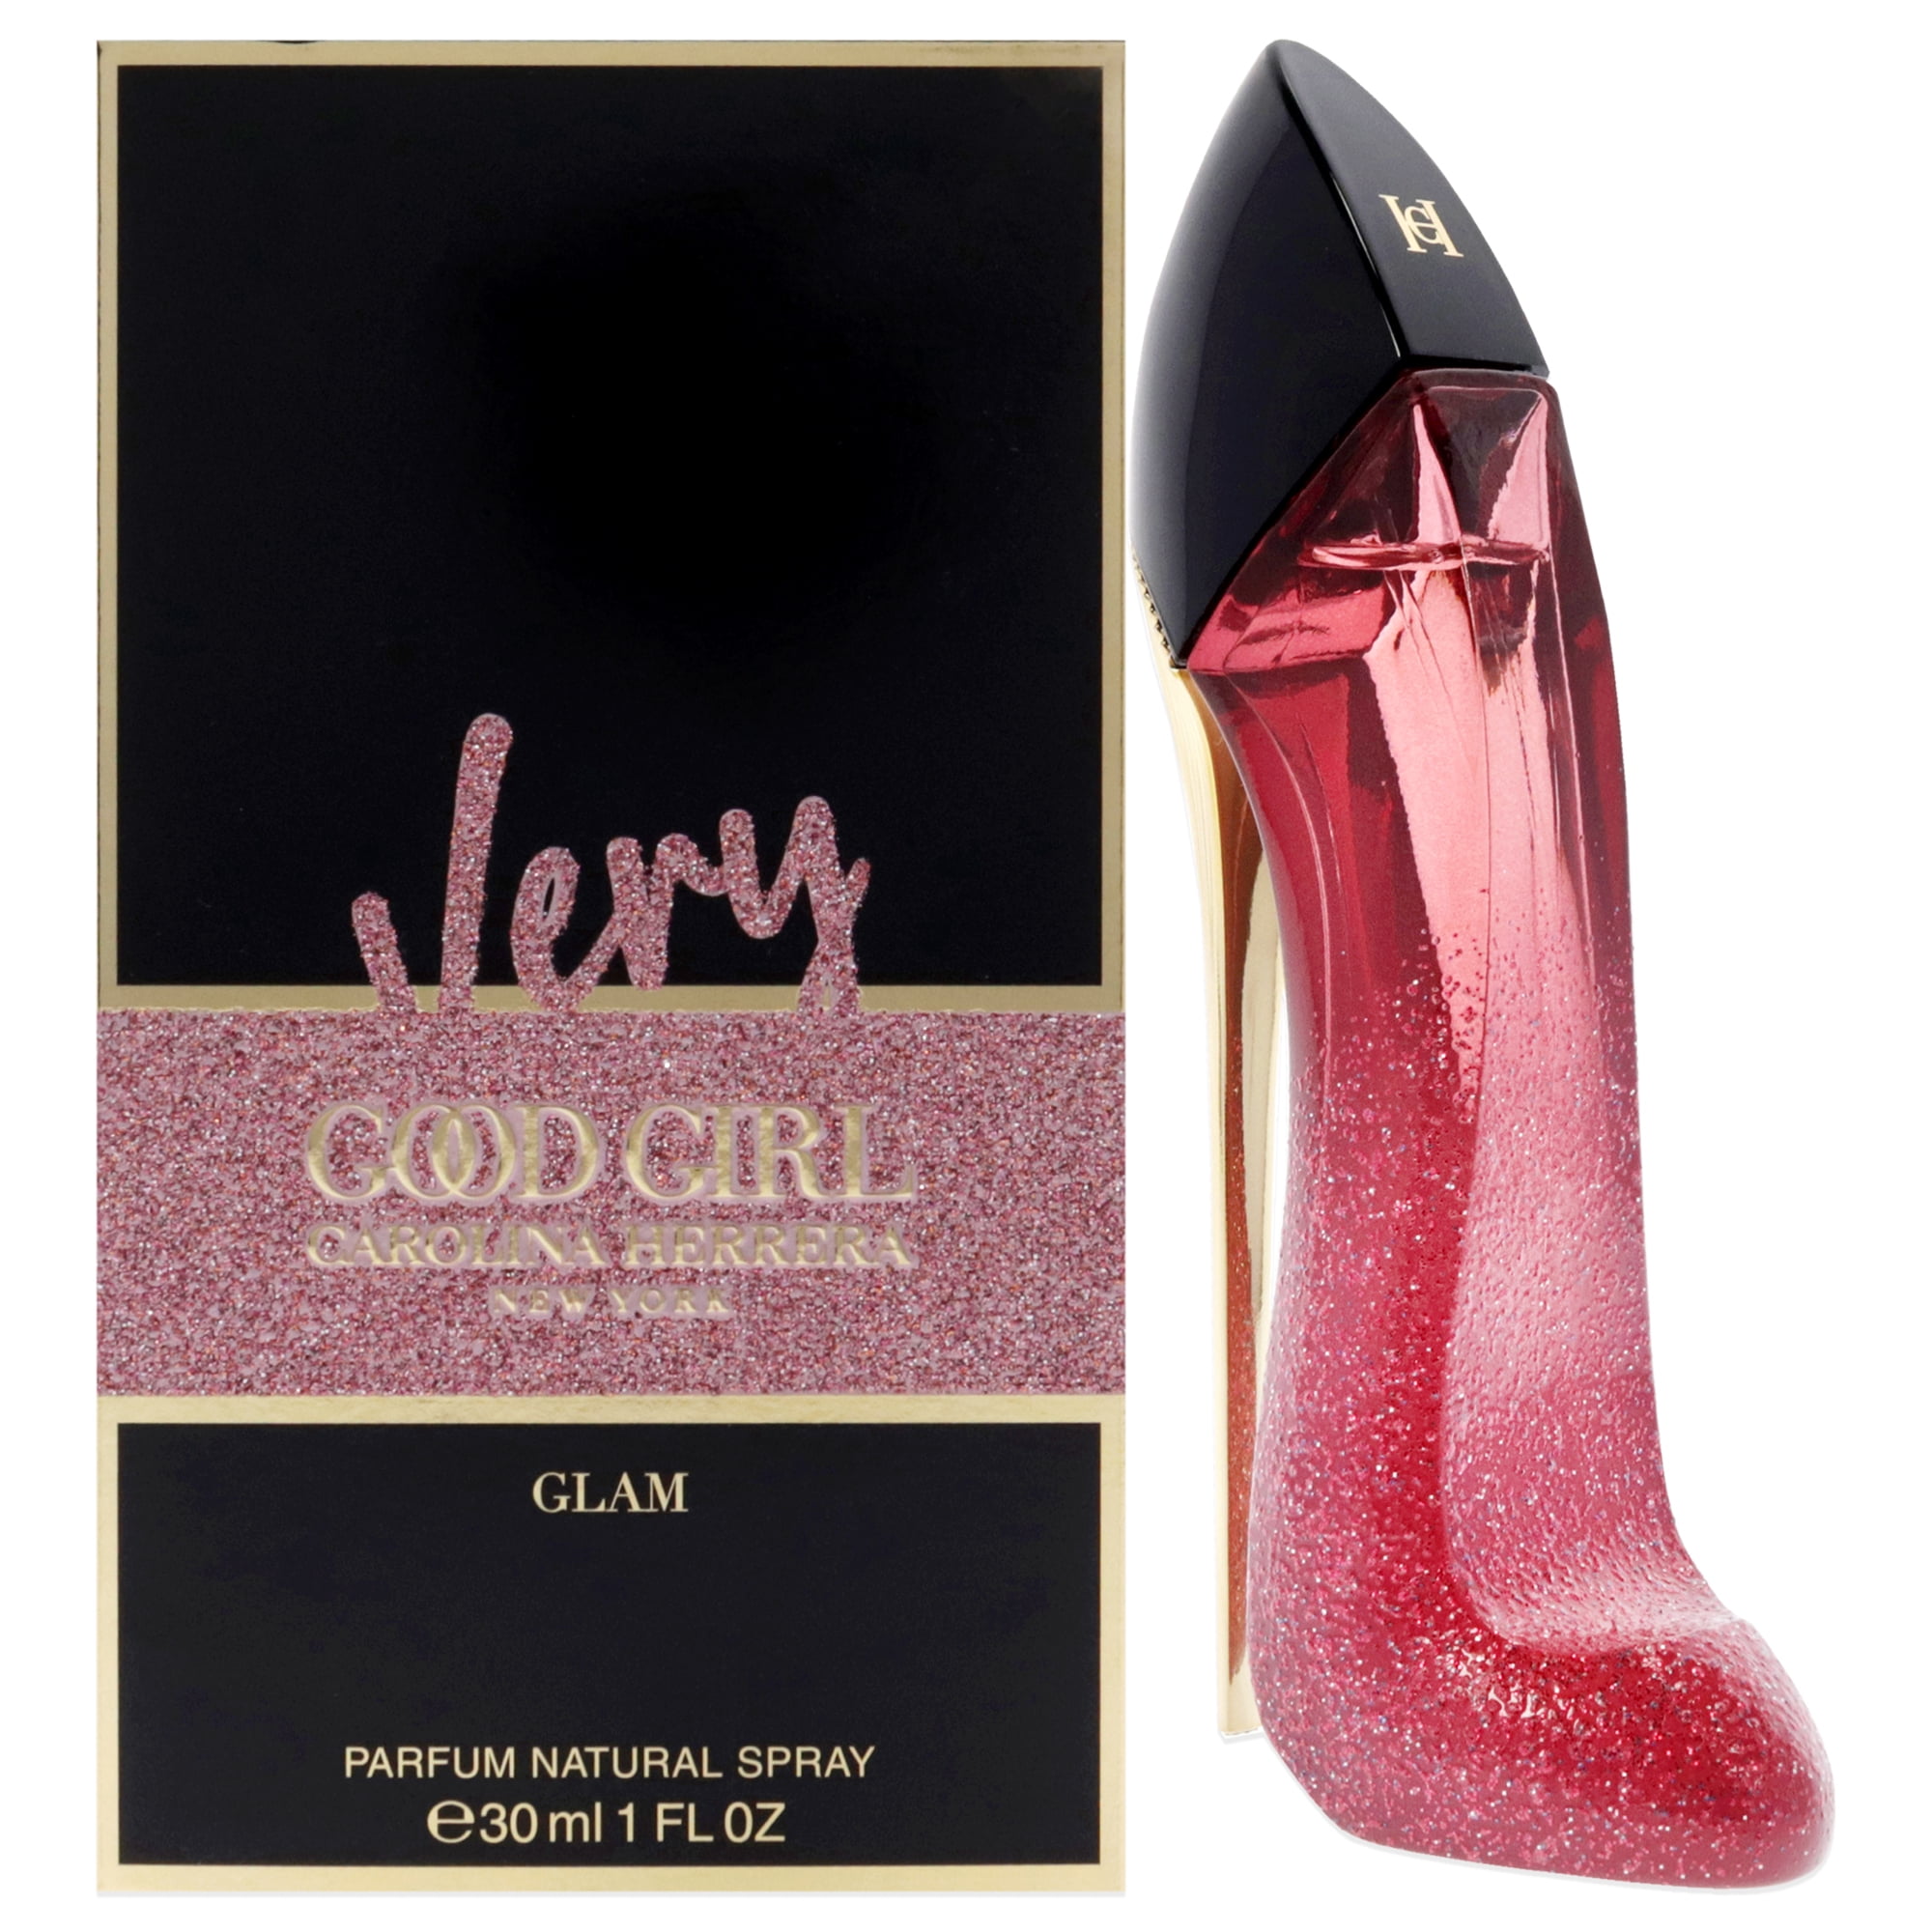 Very Good Girl Glam Eau de Parfum - Carolina Herrera